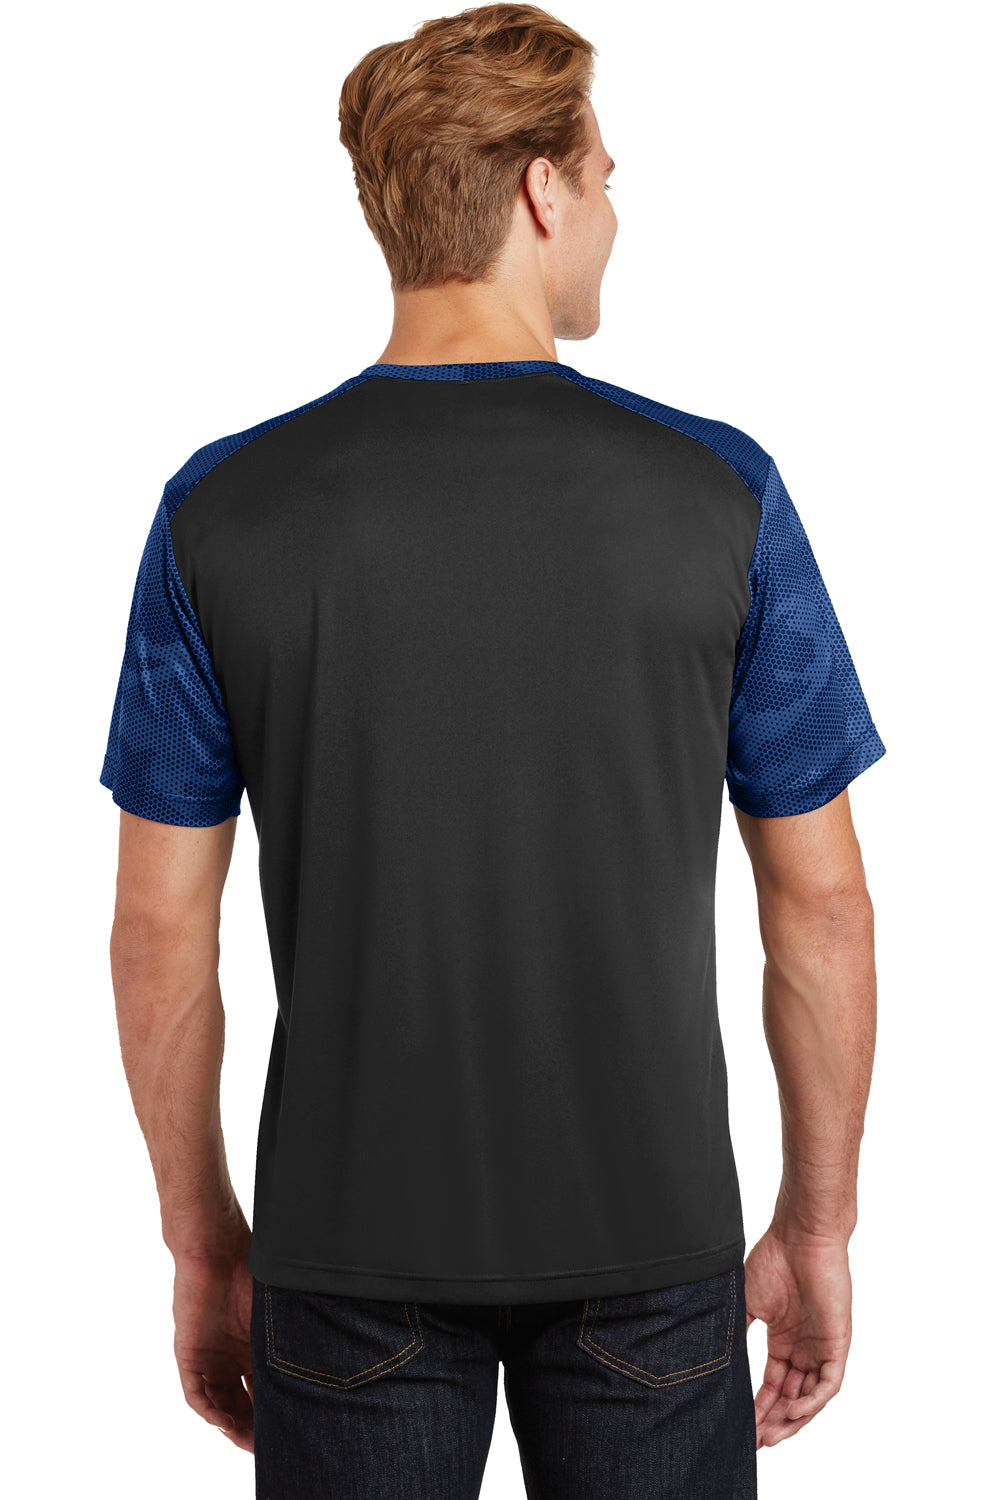 Sport-Tek ST371 Mens CamoHex Moisture Wicking Short Sleeve Crewneck T-Shirt Black/Royal Blue Back